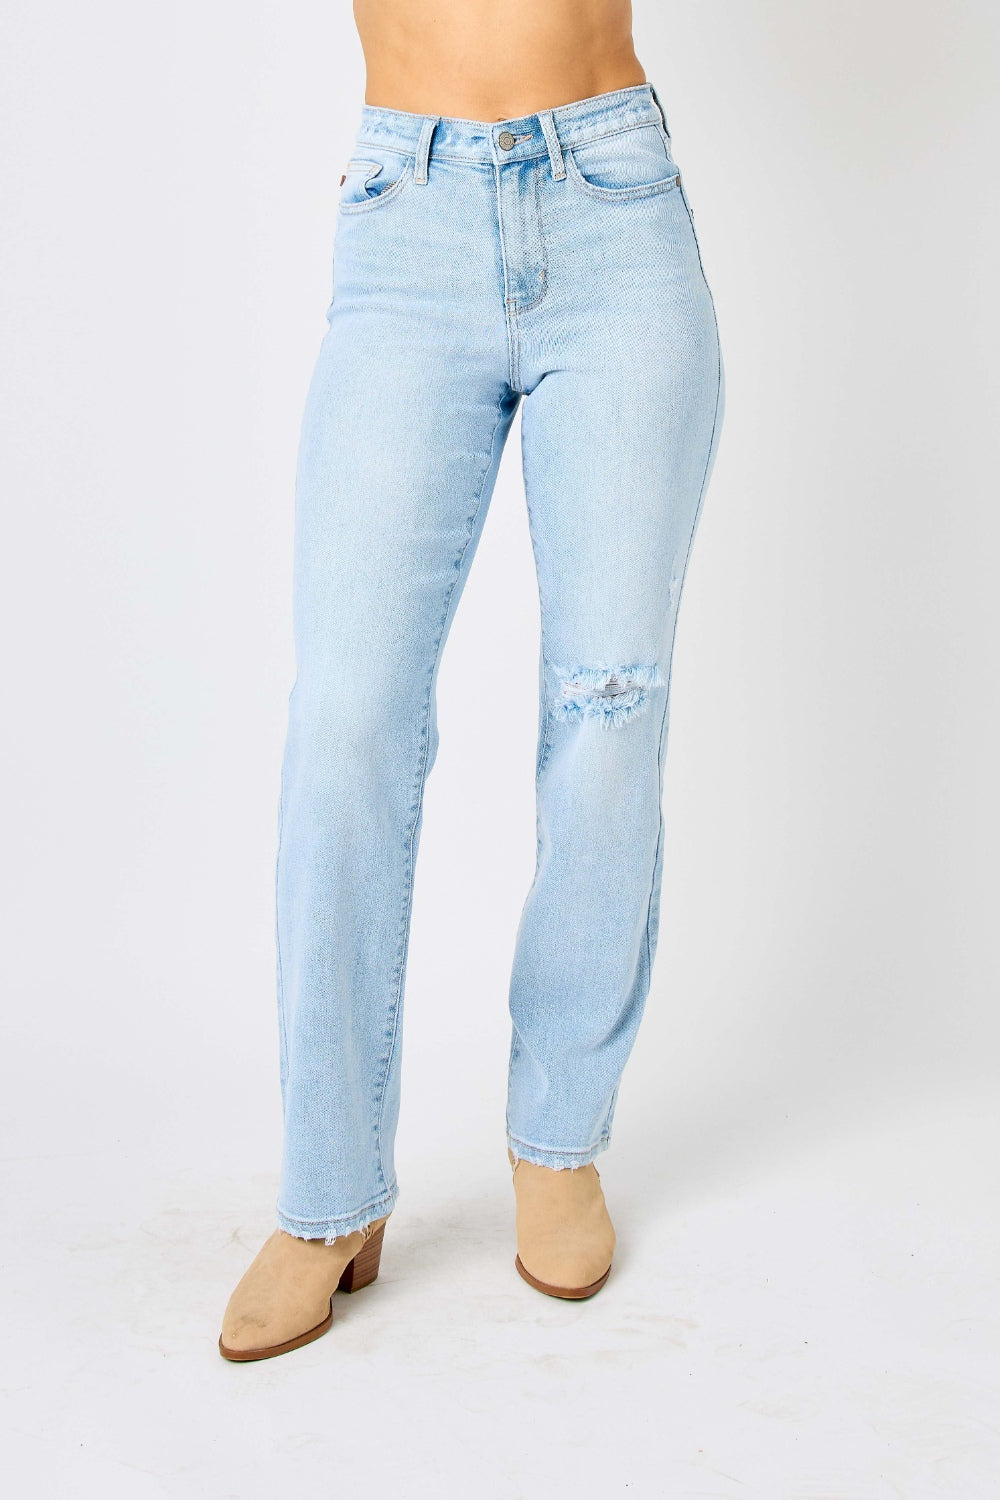 Judy Blue Full Size High Waist Distressed Straight Jeans - Tigbuls Variety Fashion